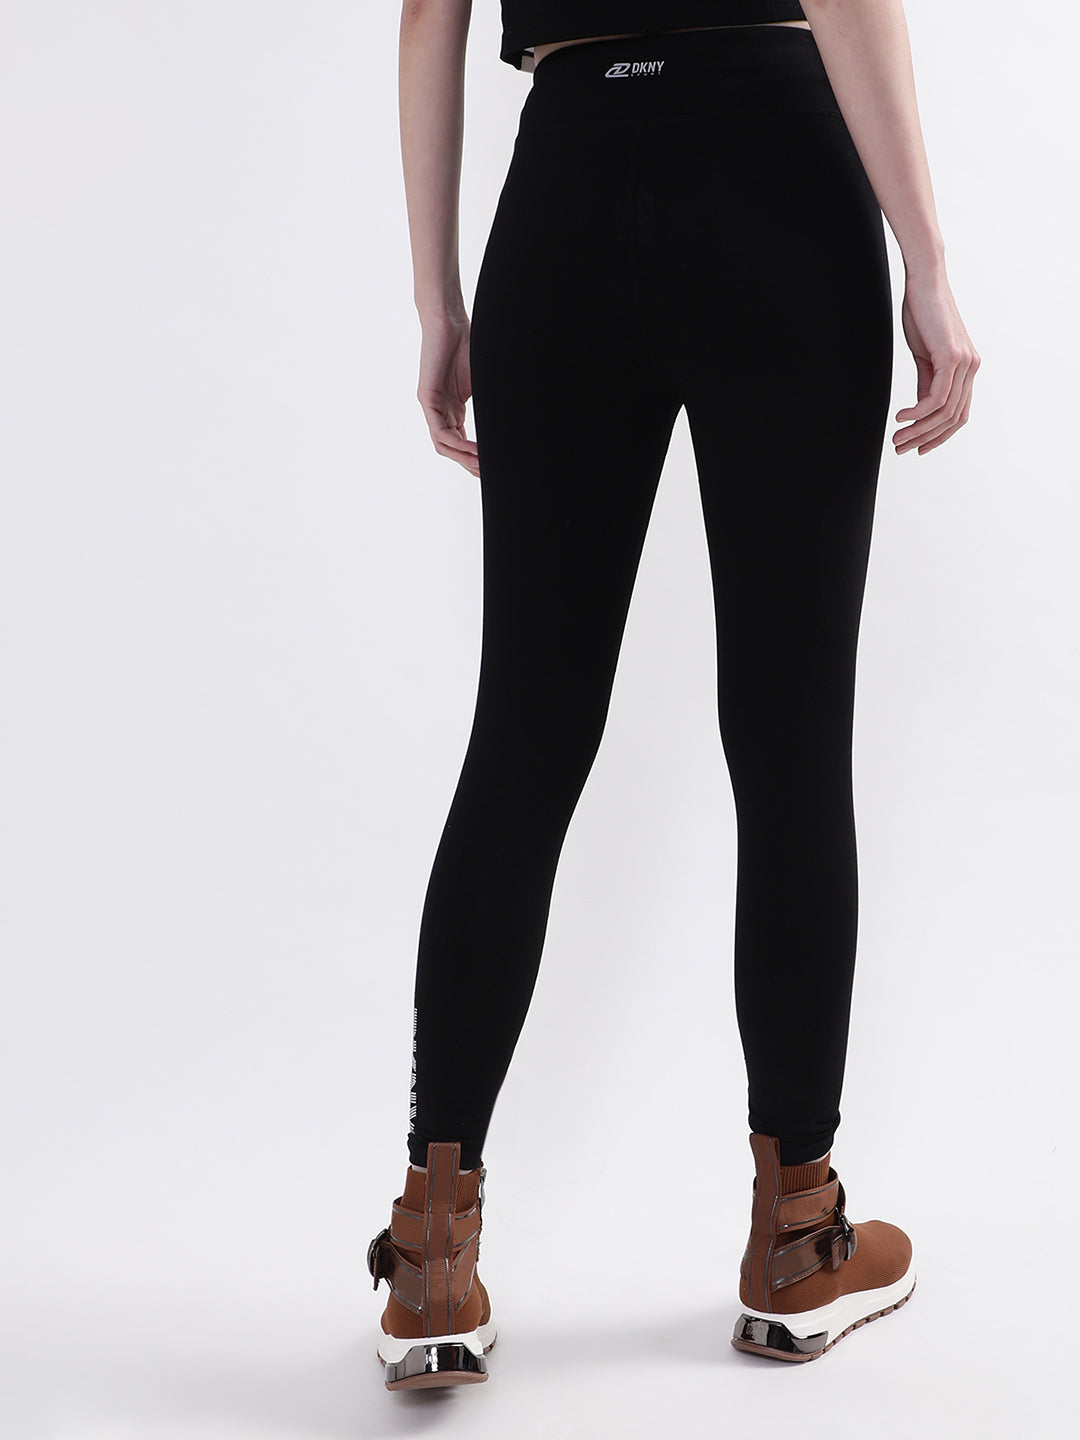 Buy DKNY Women's High Waist 7/8 Mesh Criss Cross Legging, Cement Heather, M  at Amazon.in